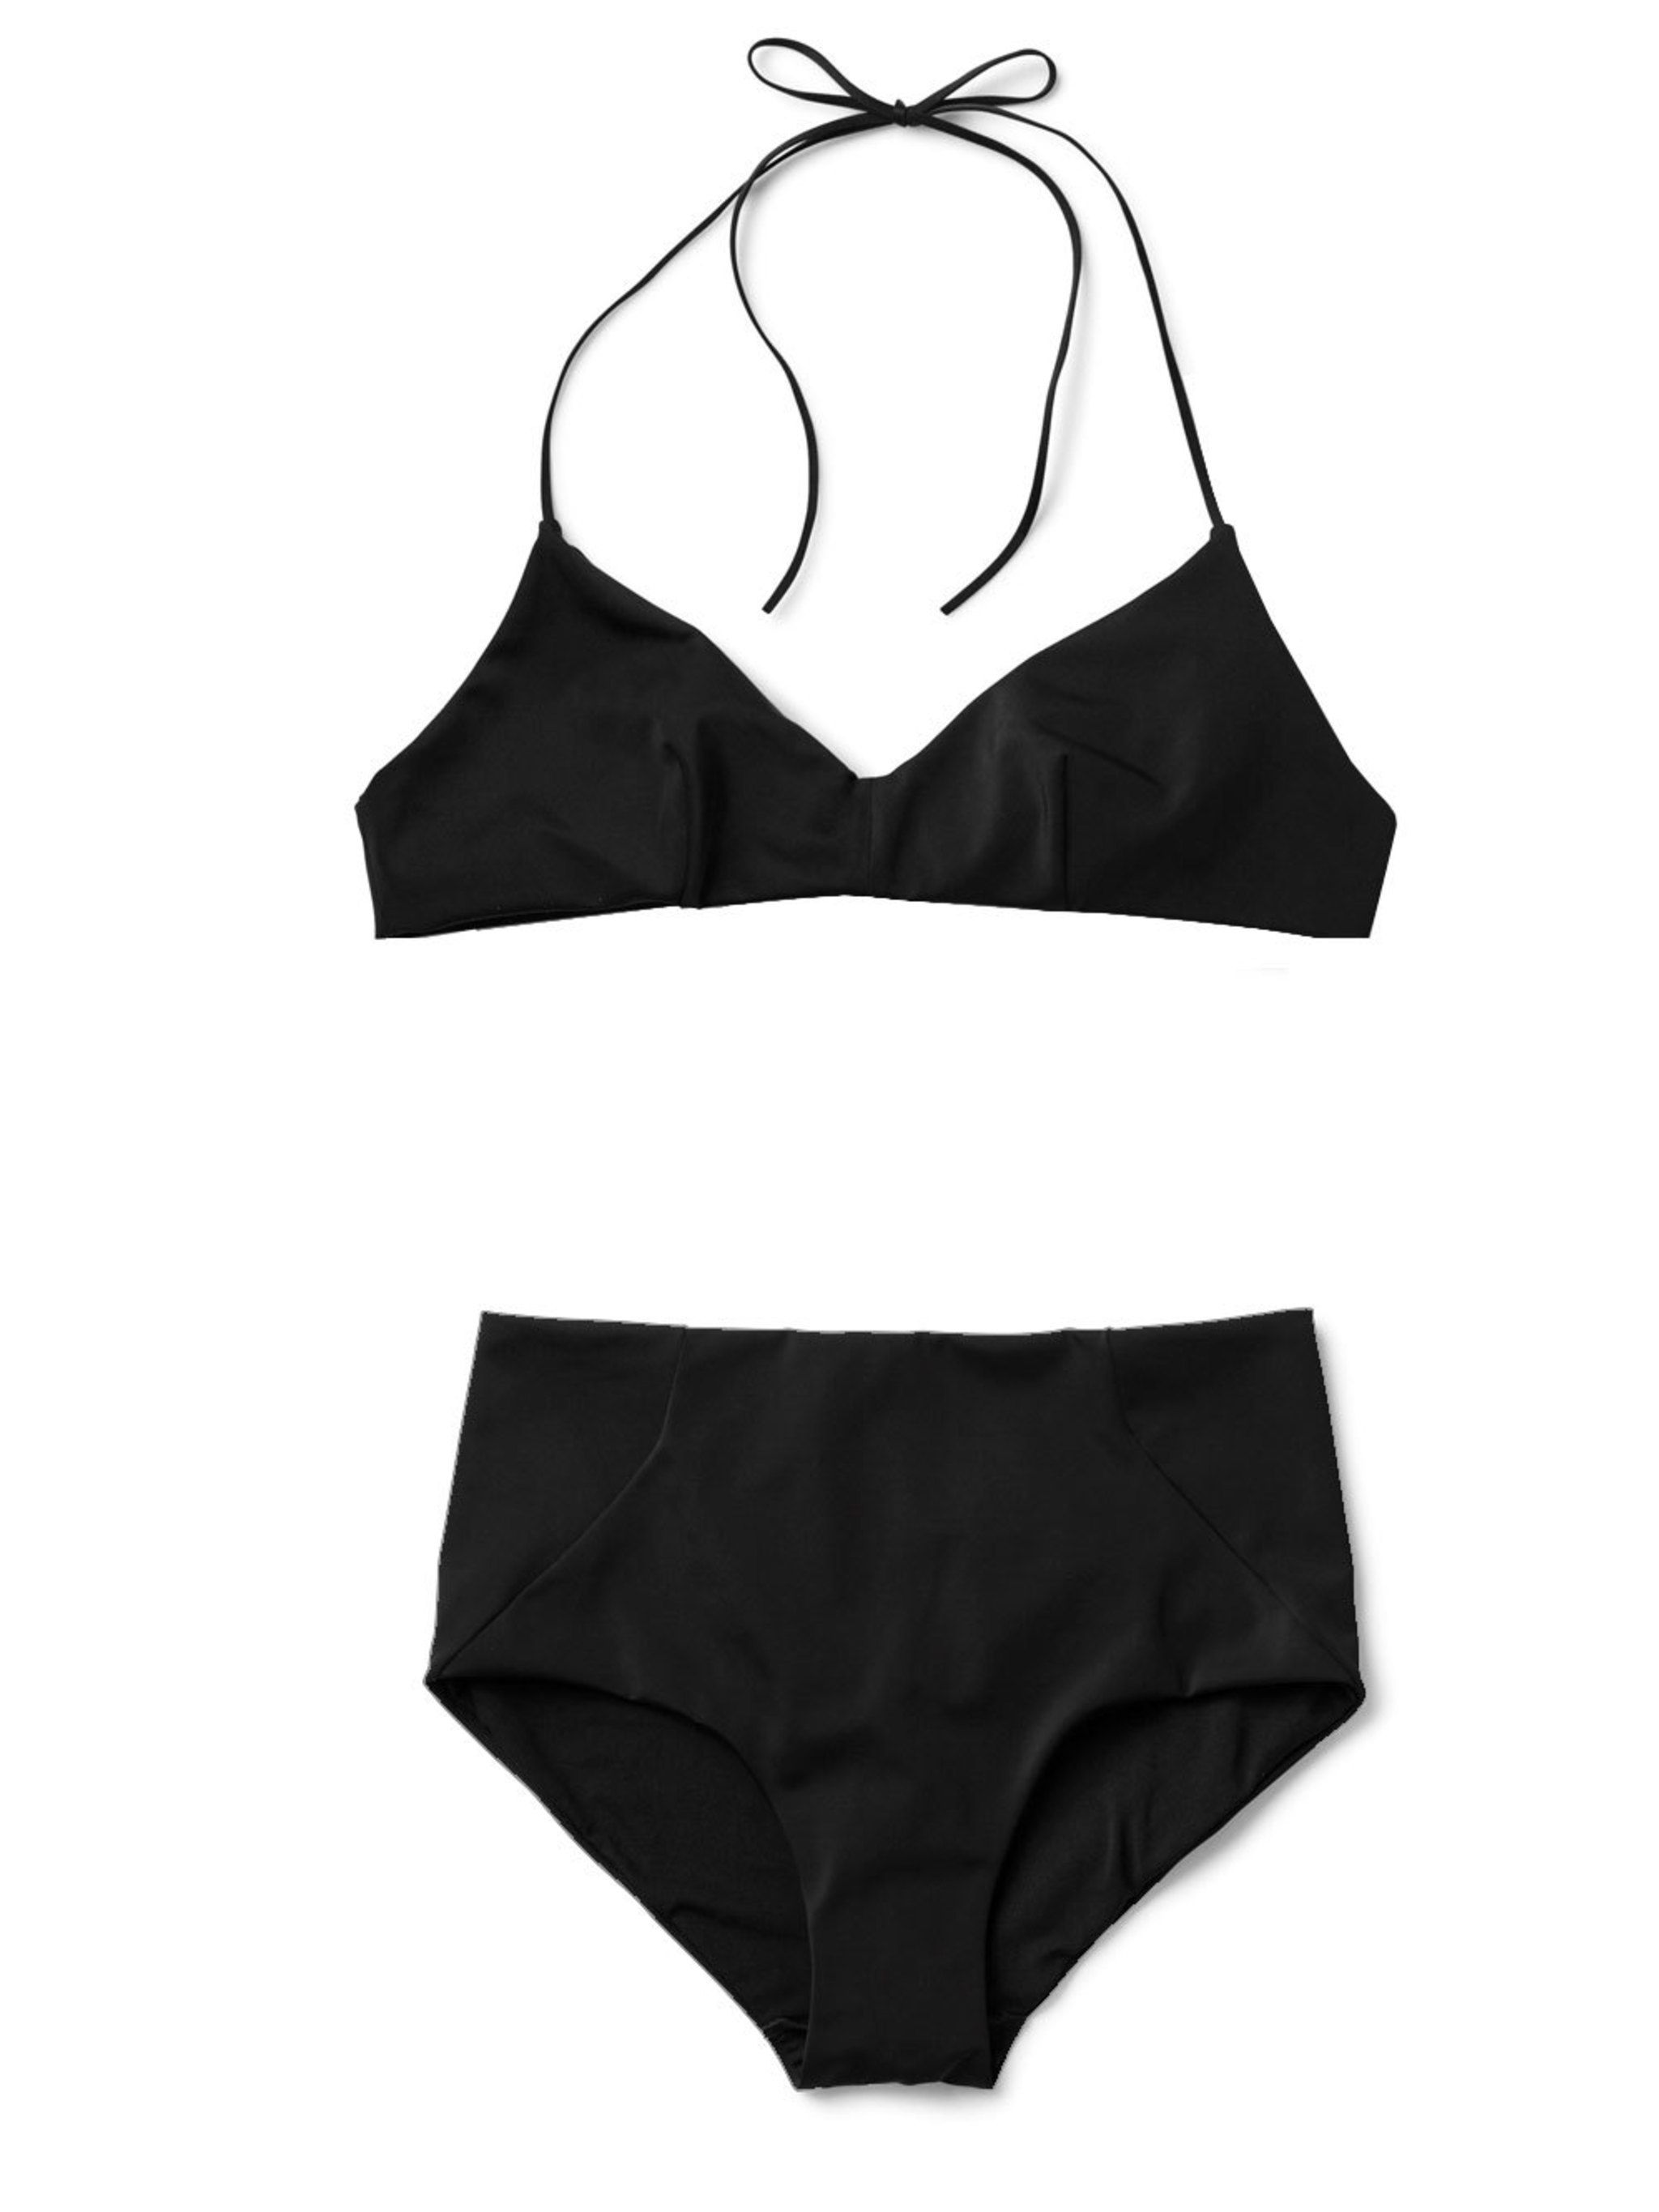 Uitgelezene Dit wil je dragen deze zomer: bikini's met hoge taille MW-19